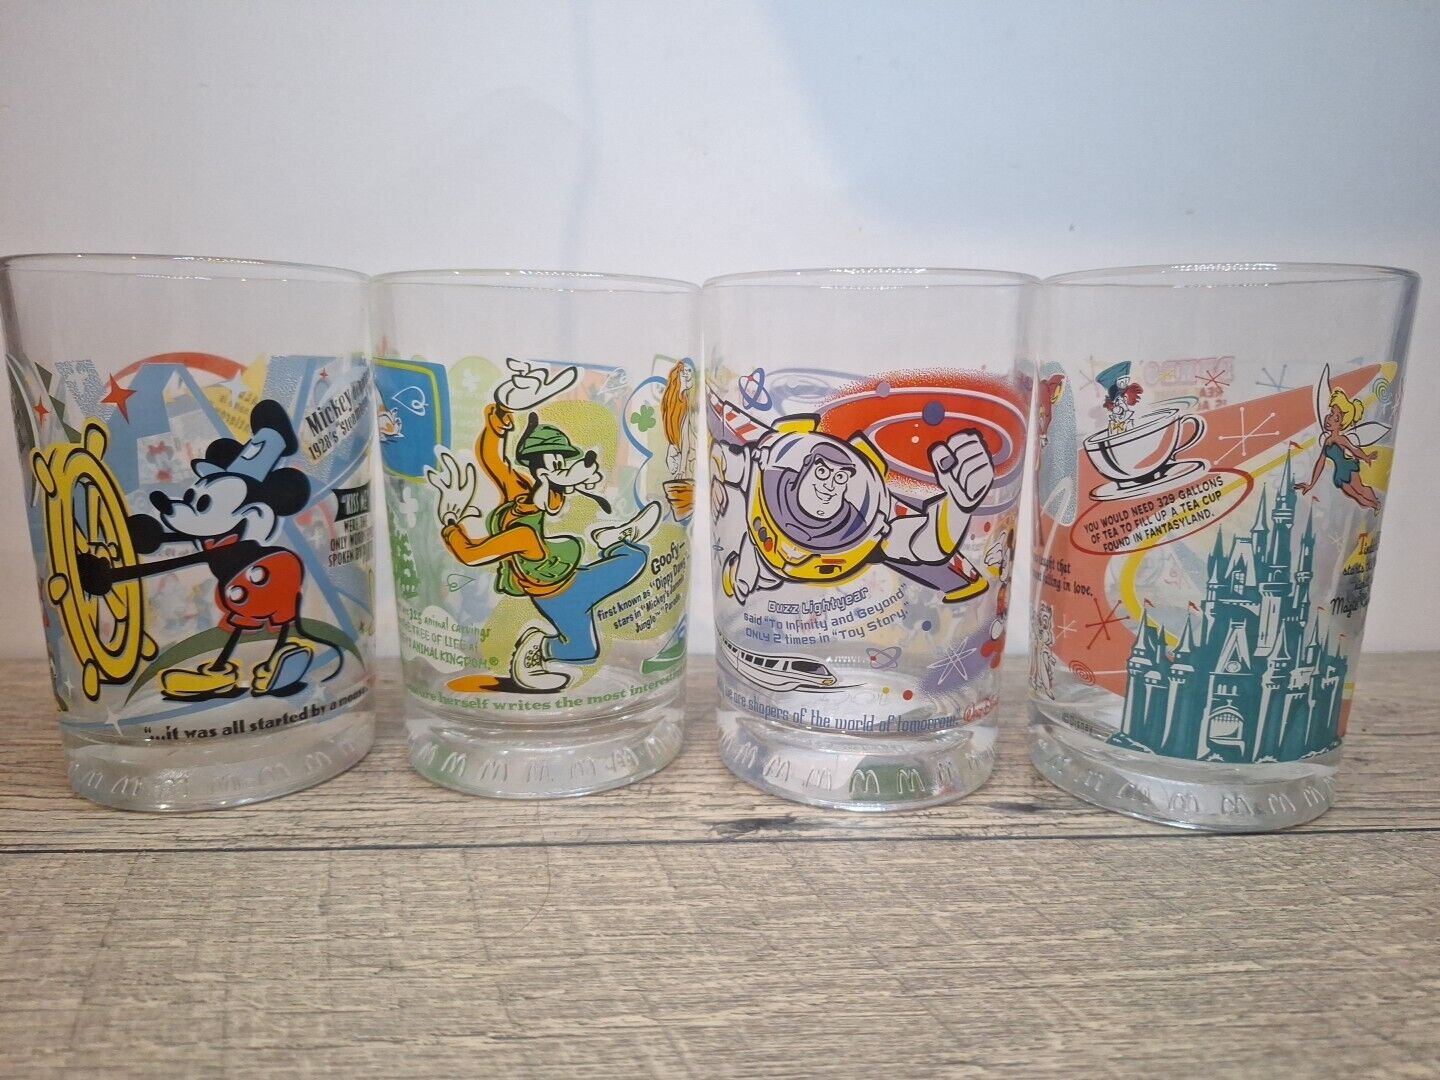 McDonalds Walt Disney World 100 Years of Magic Collector Glasses set of 4